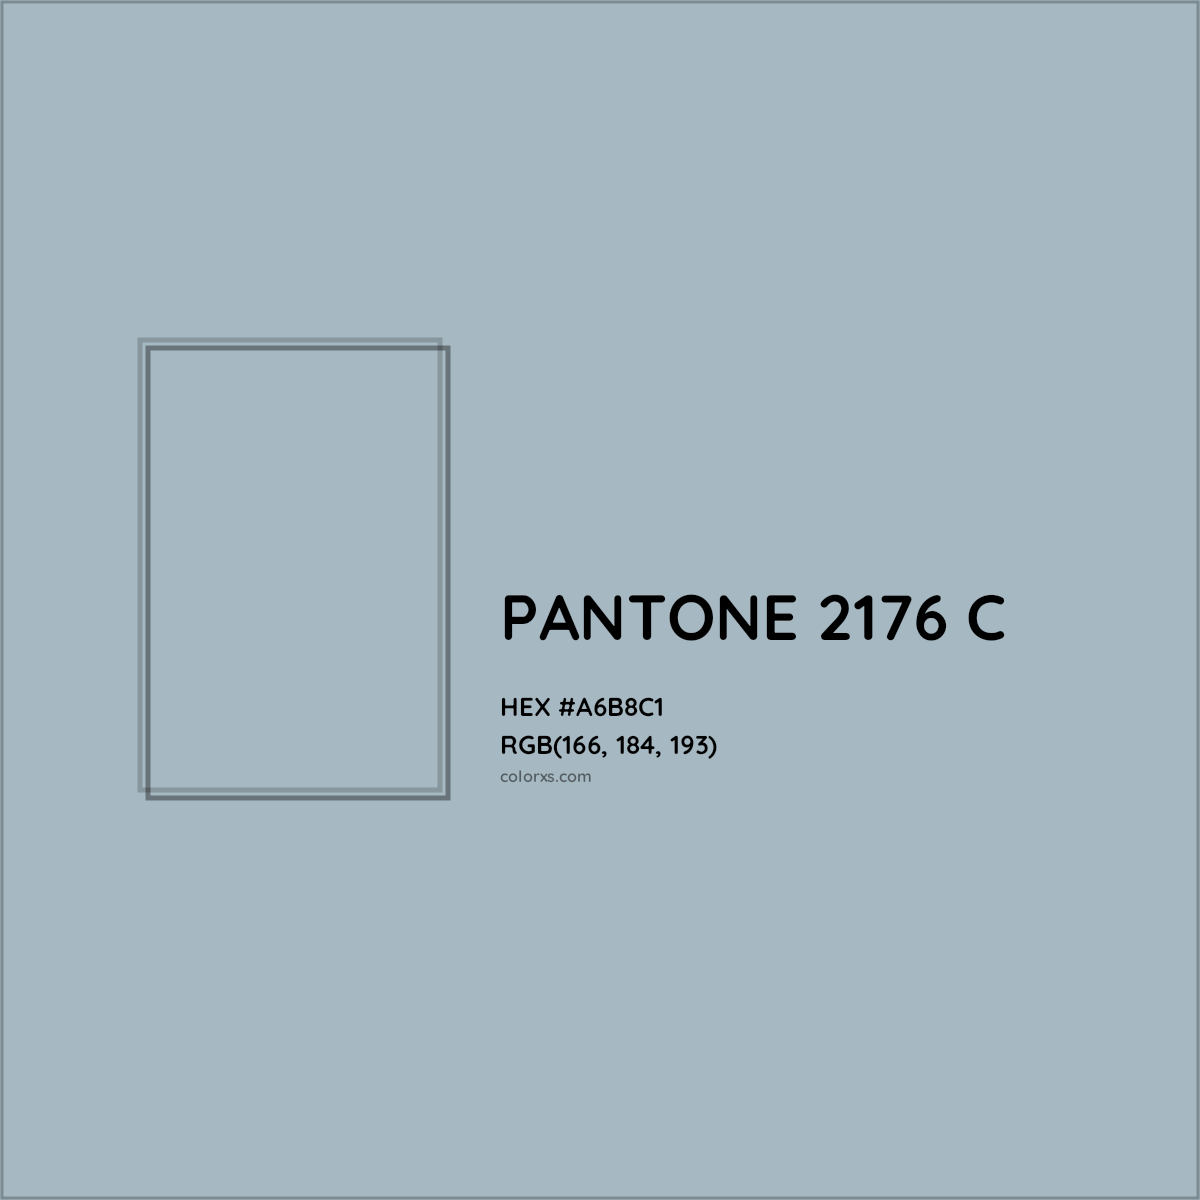 HEX #A6B8C1 PANTONE 2176 C CMS Pantone PMS - Color Code